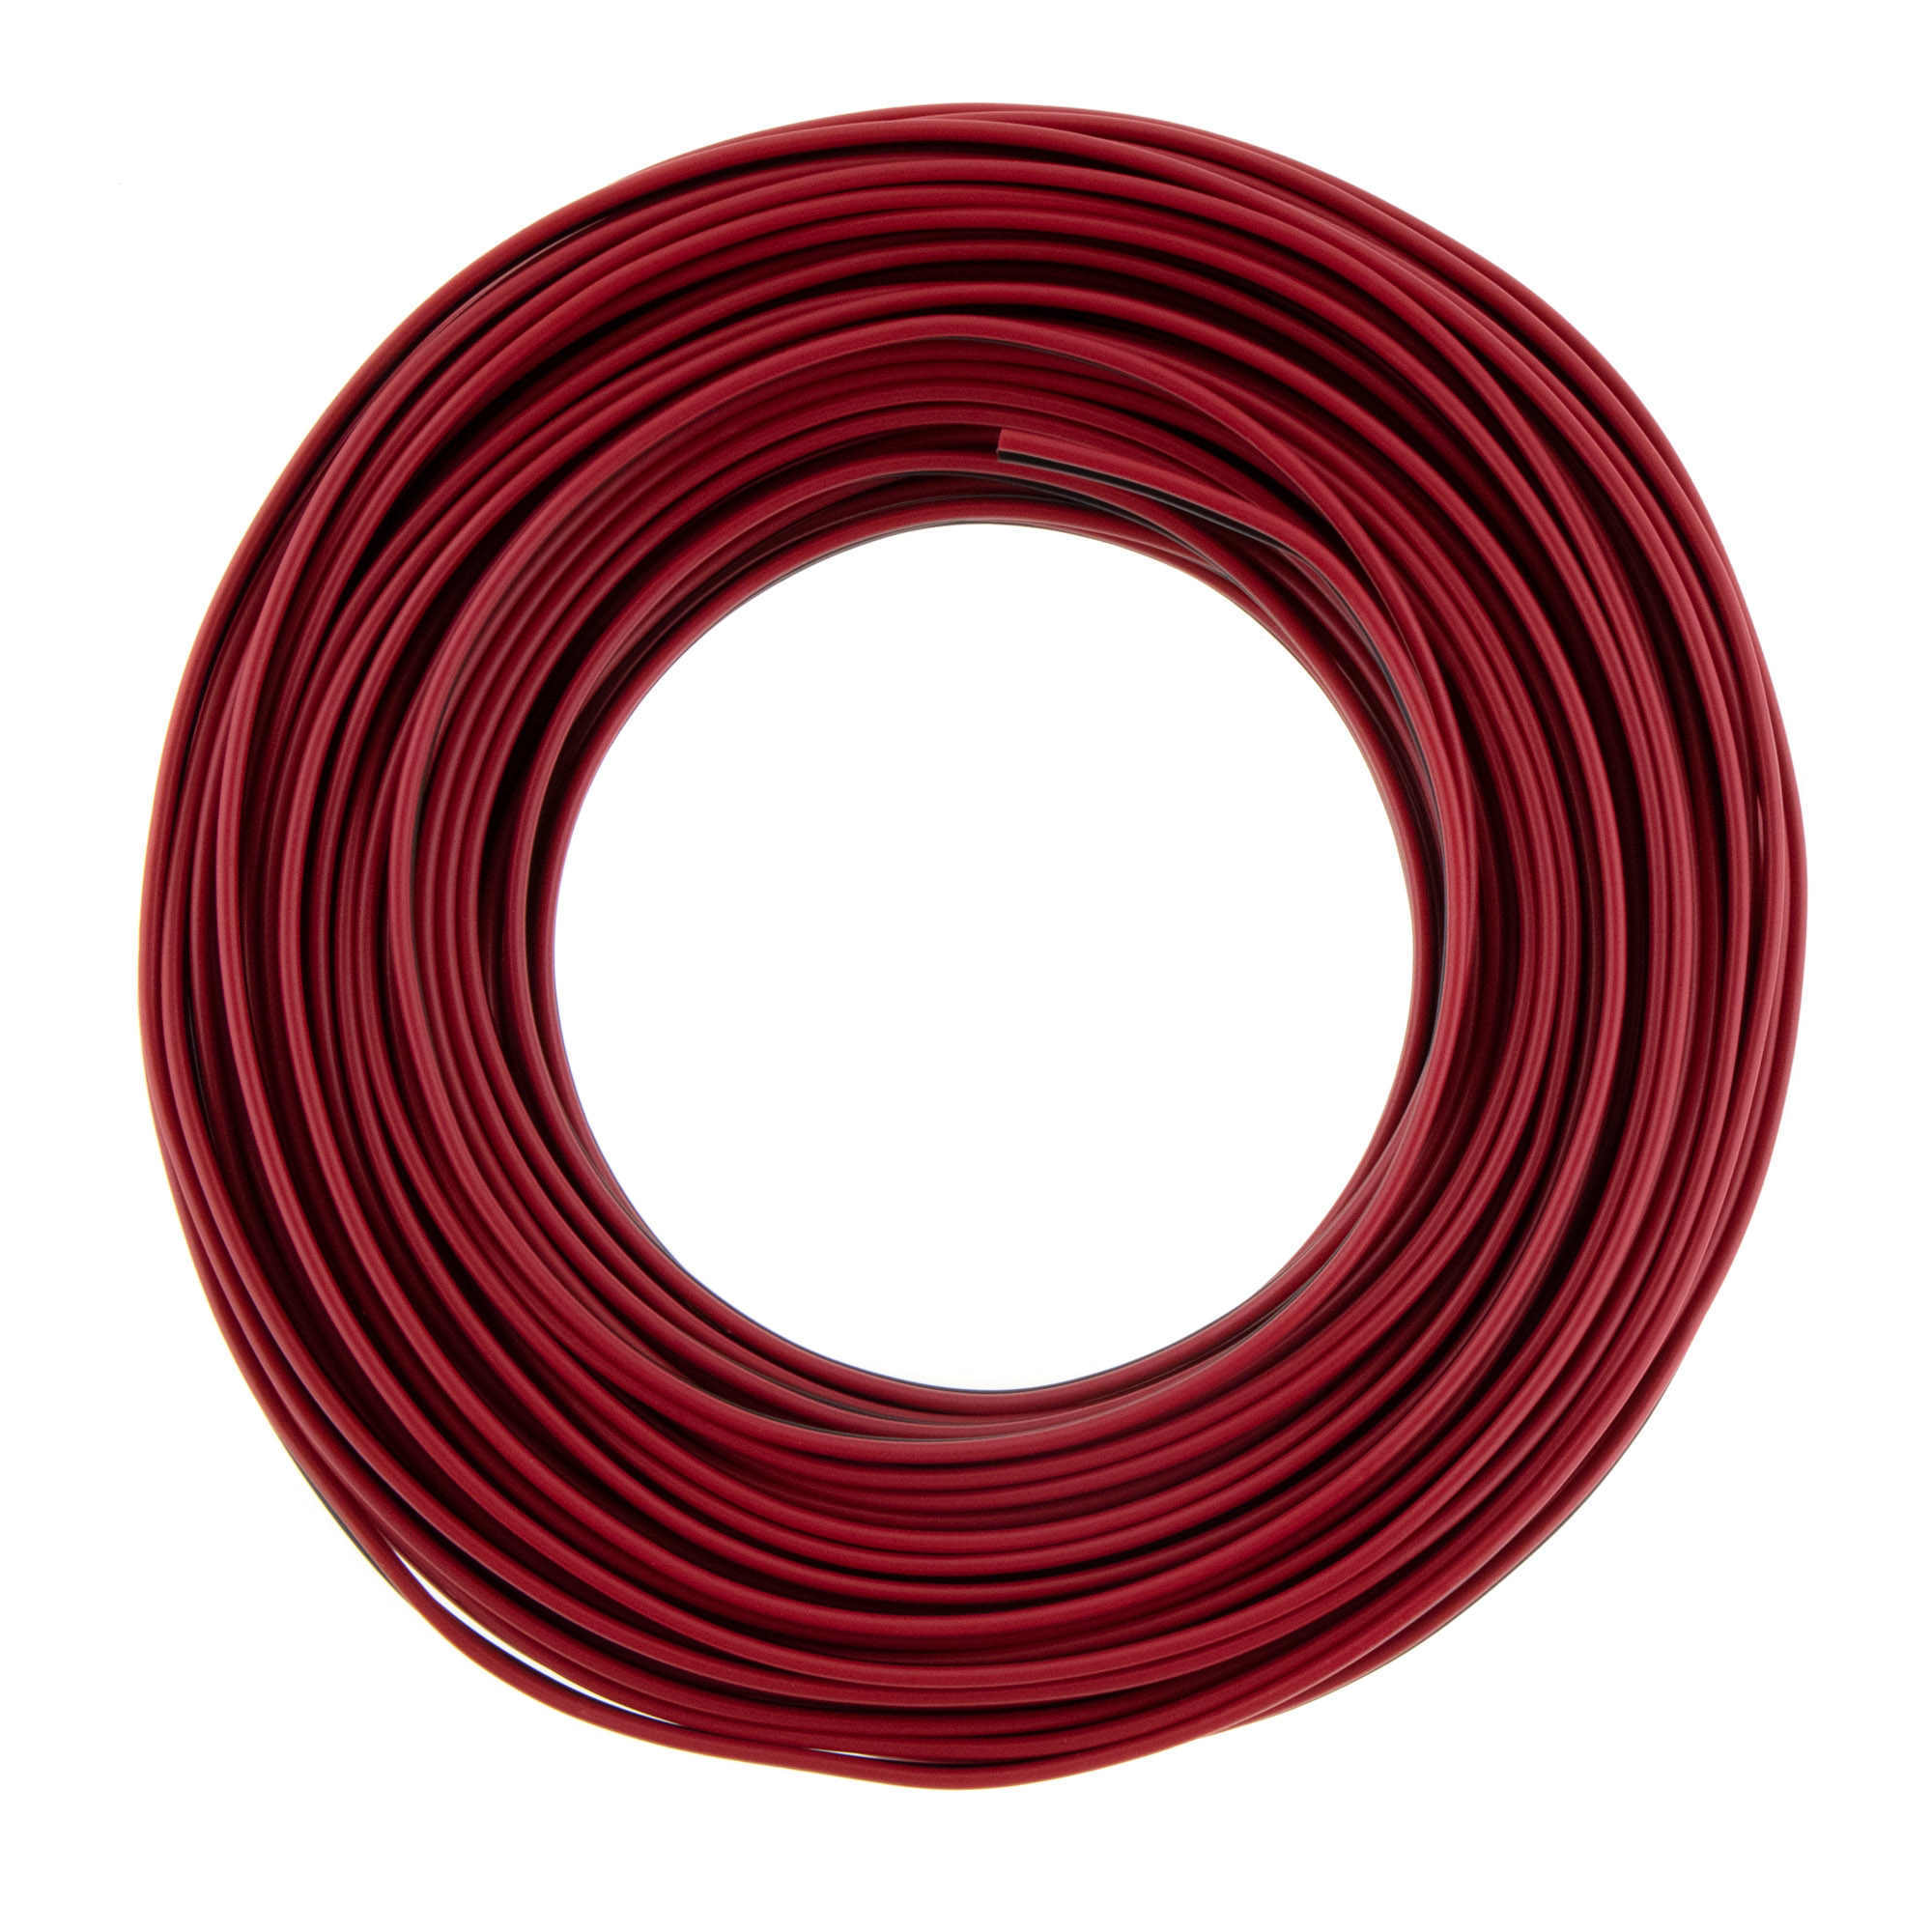 Loudspeaker cable red/black 25m 0.75mm